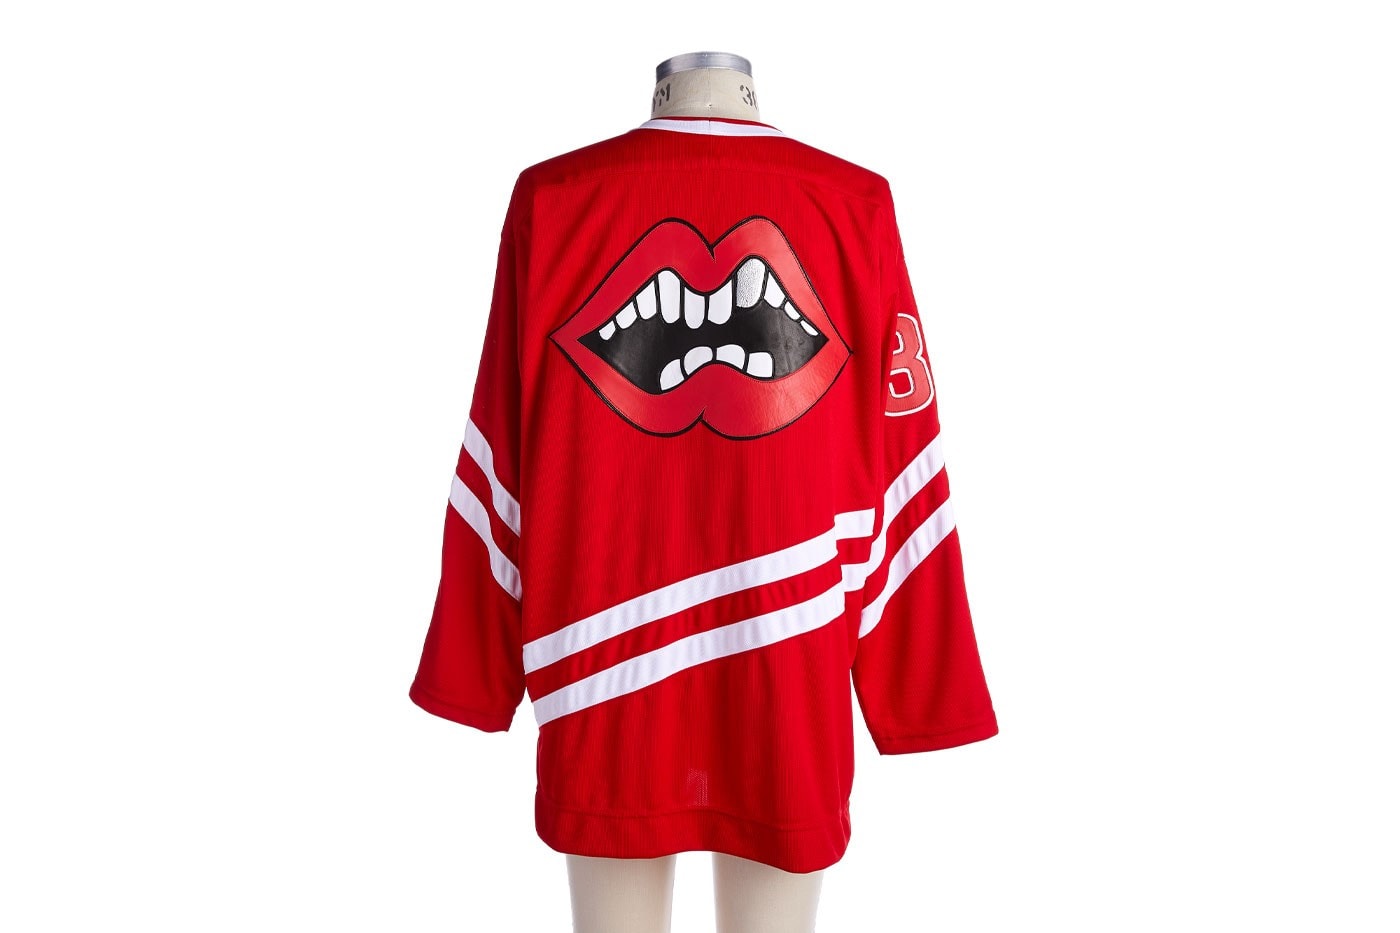 Chrome Hearts 推出要價 $3,500 美元奢華曲棍球衣